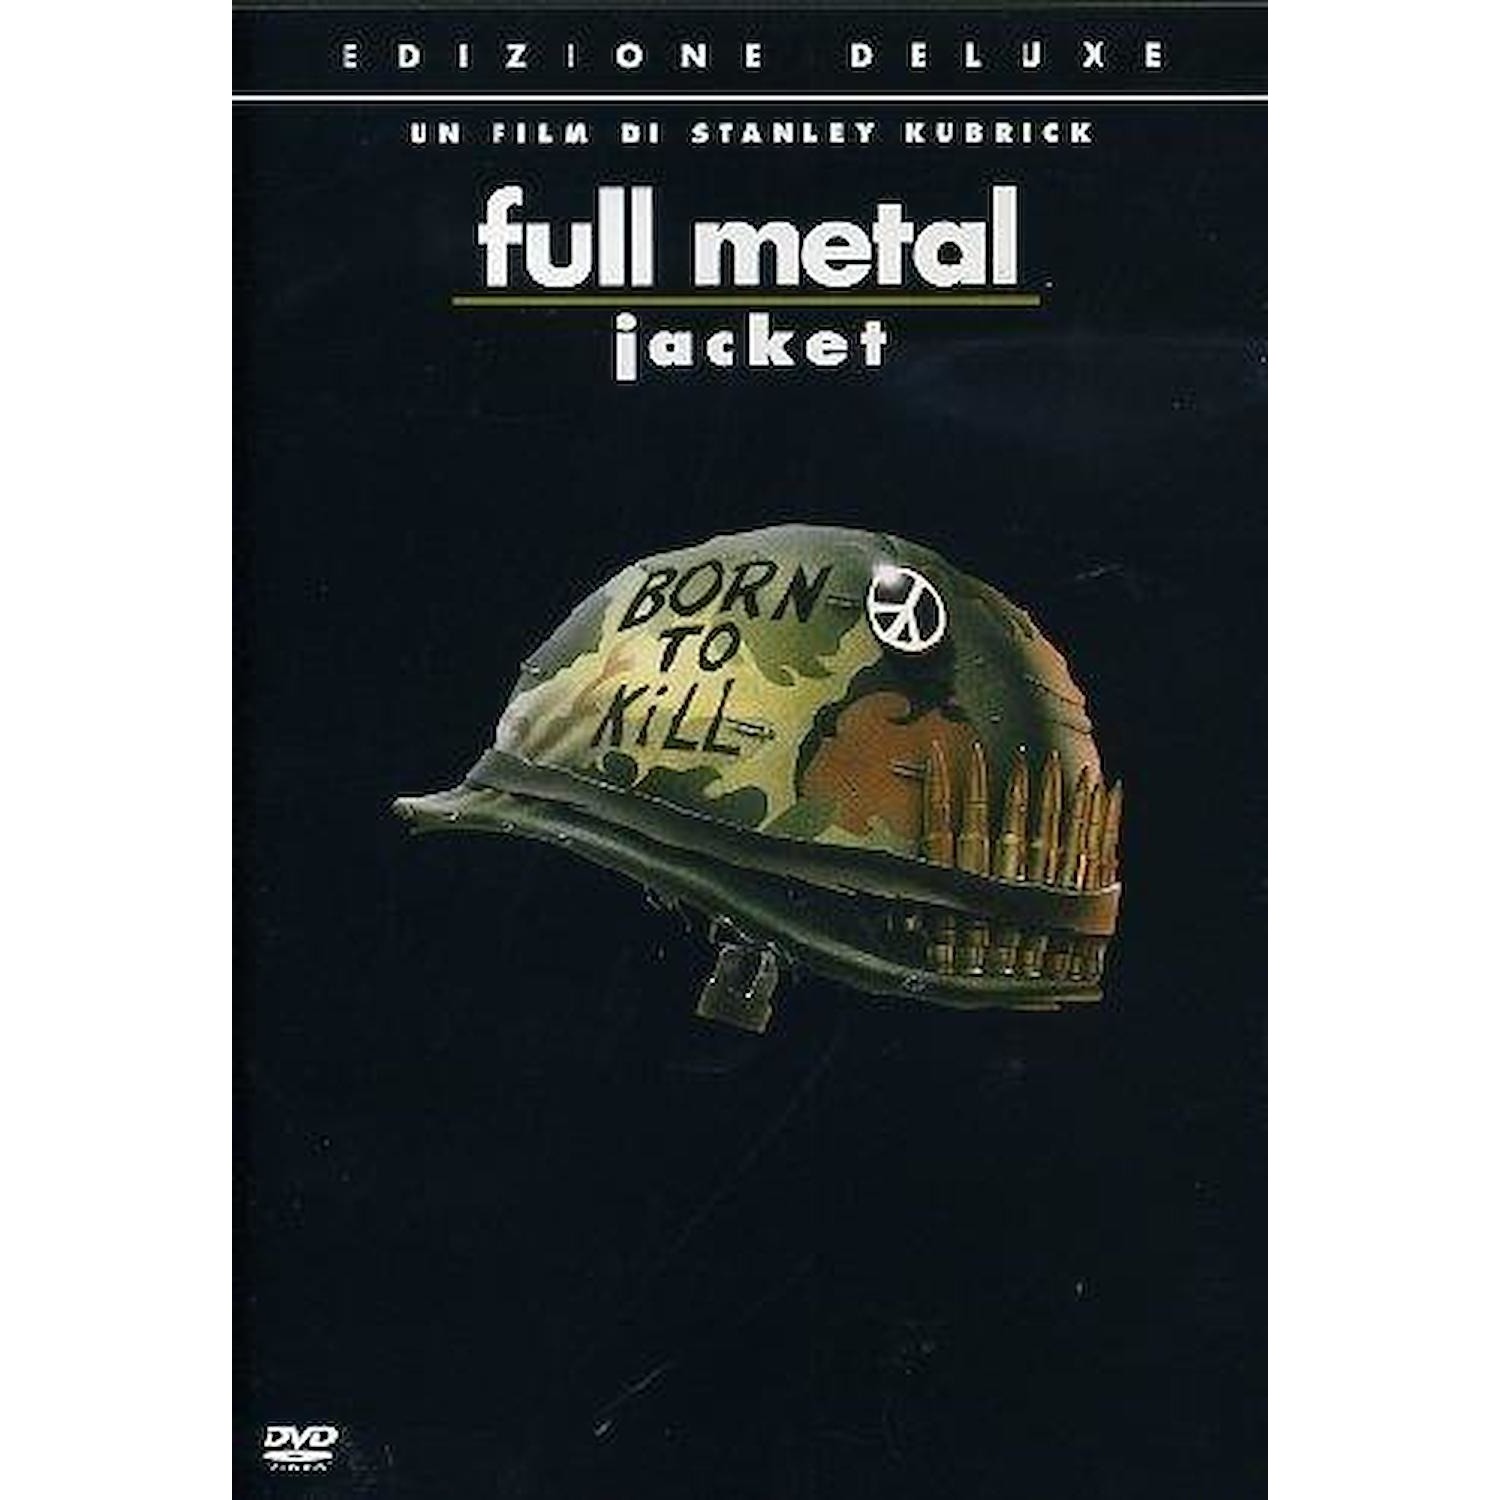 Immagine per DVD Full metal jacket da DIMOStore